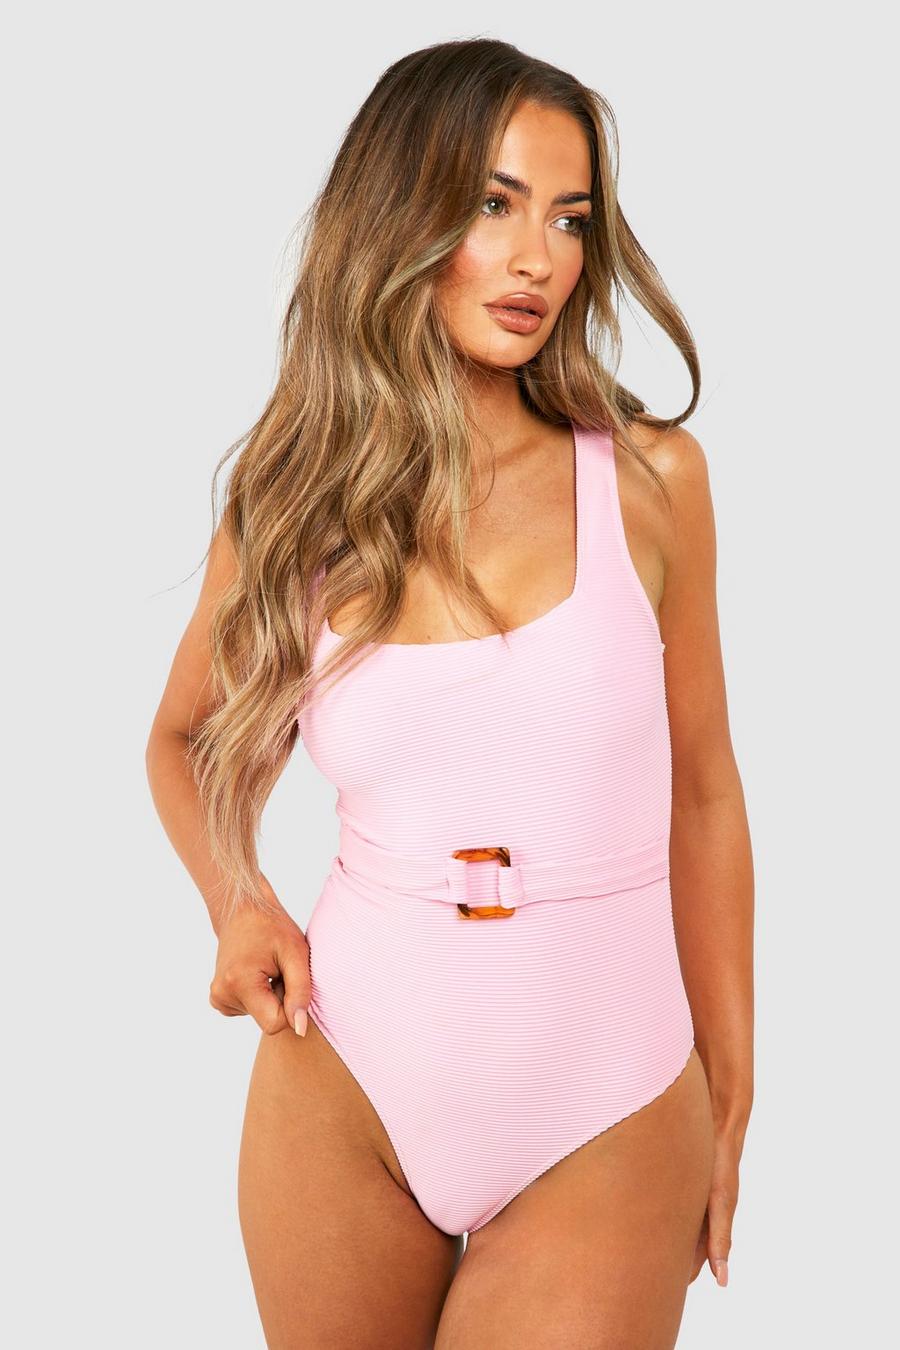 Gerippter Shaping-Badeanzug mit geradem Ausschnitt, Baby pink